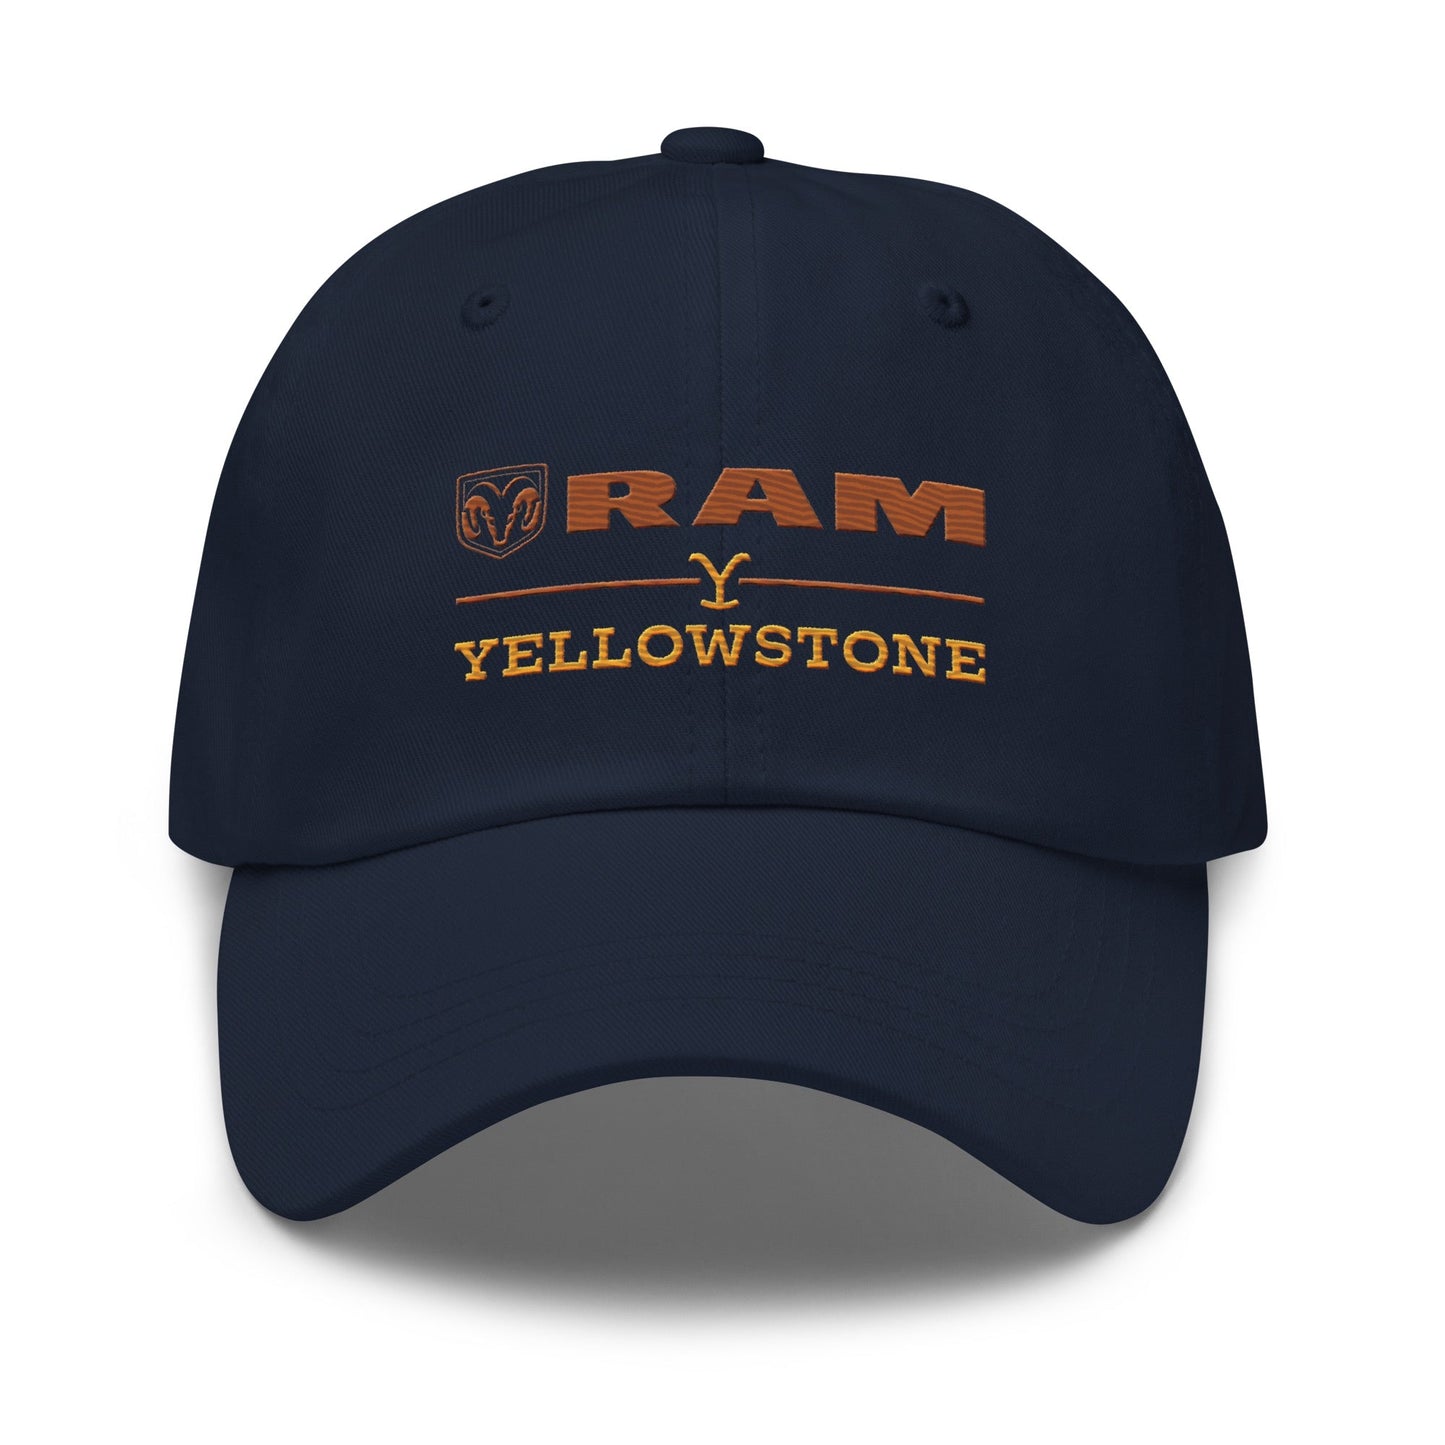 Yellowstone x Ram Dad Hat